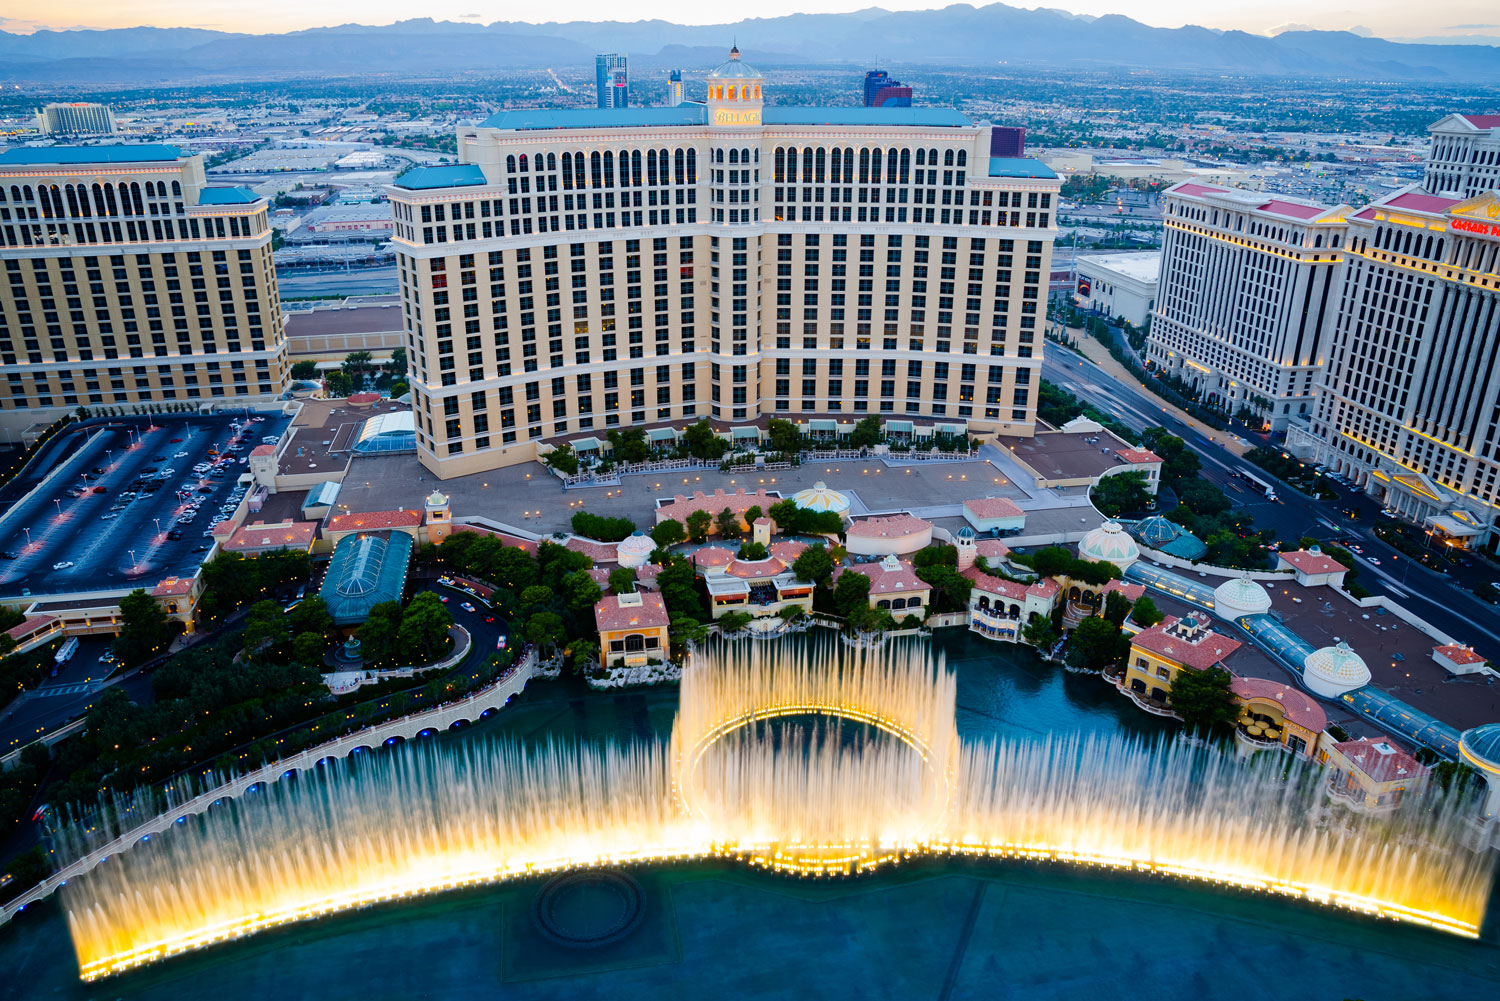 The Bellagio Fountains in Las Vegas, USA.